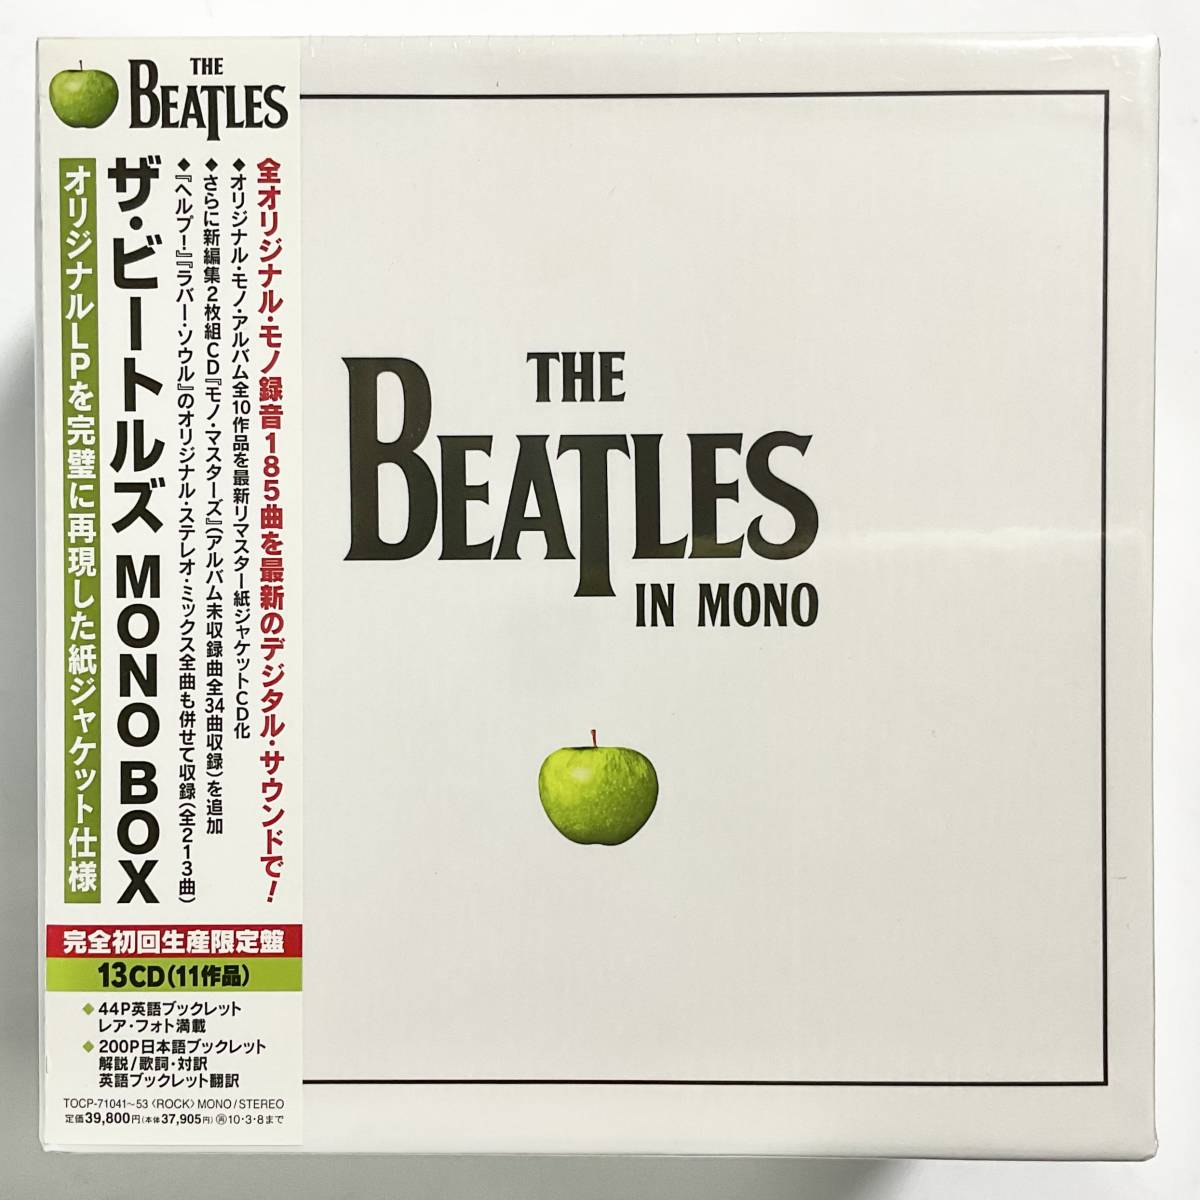 ザ・ビートルズ MONO BOX 完全初回生産限定盤 新品未開封品-